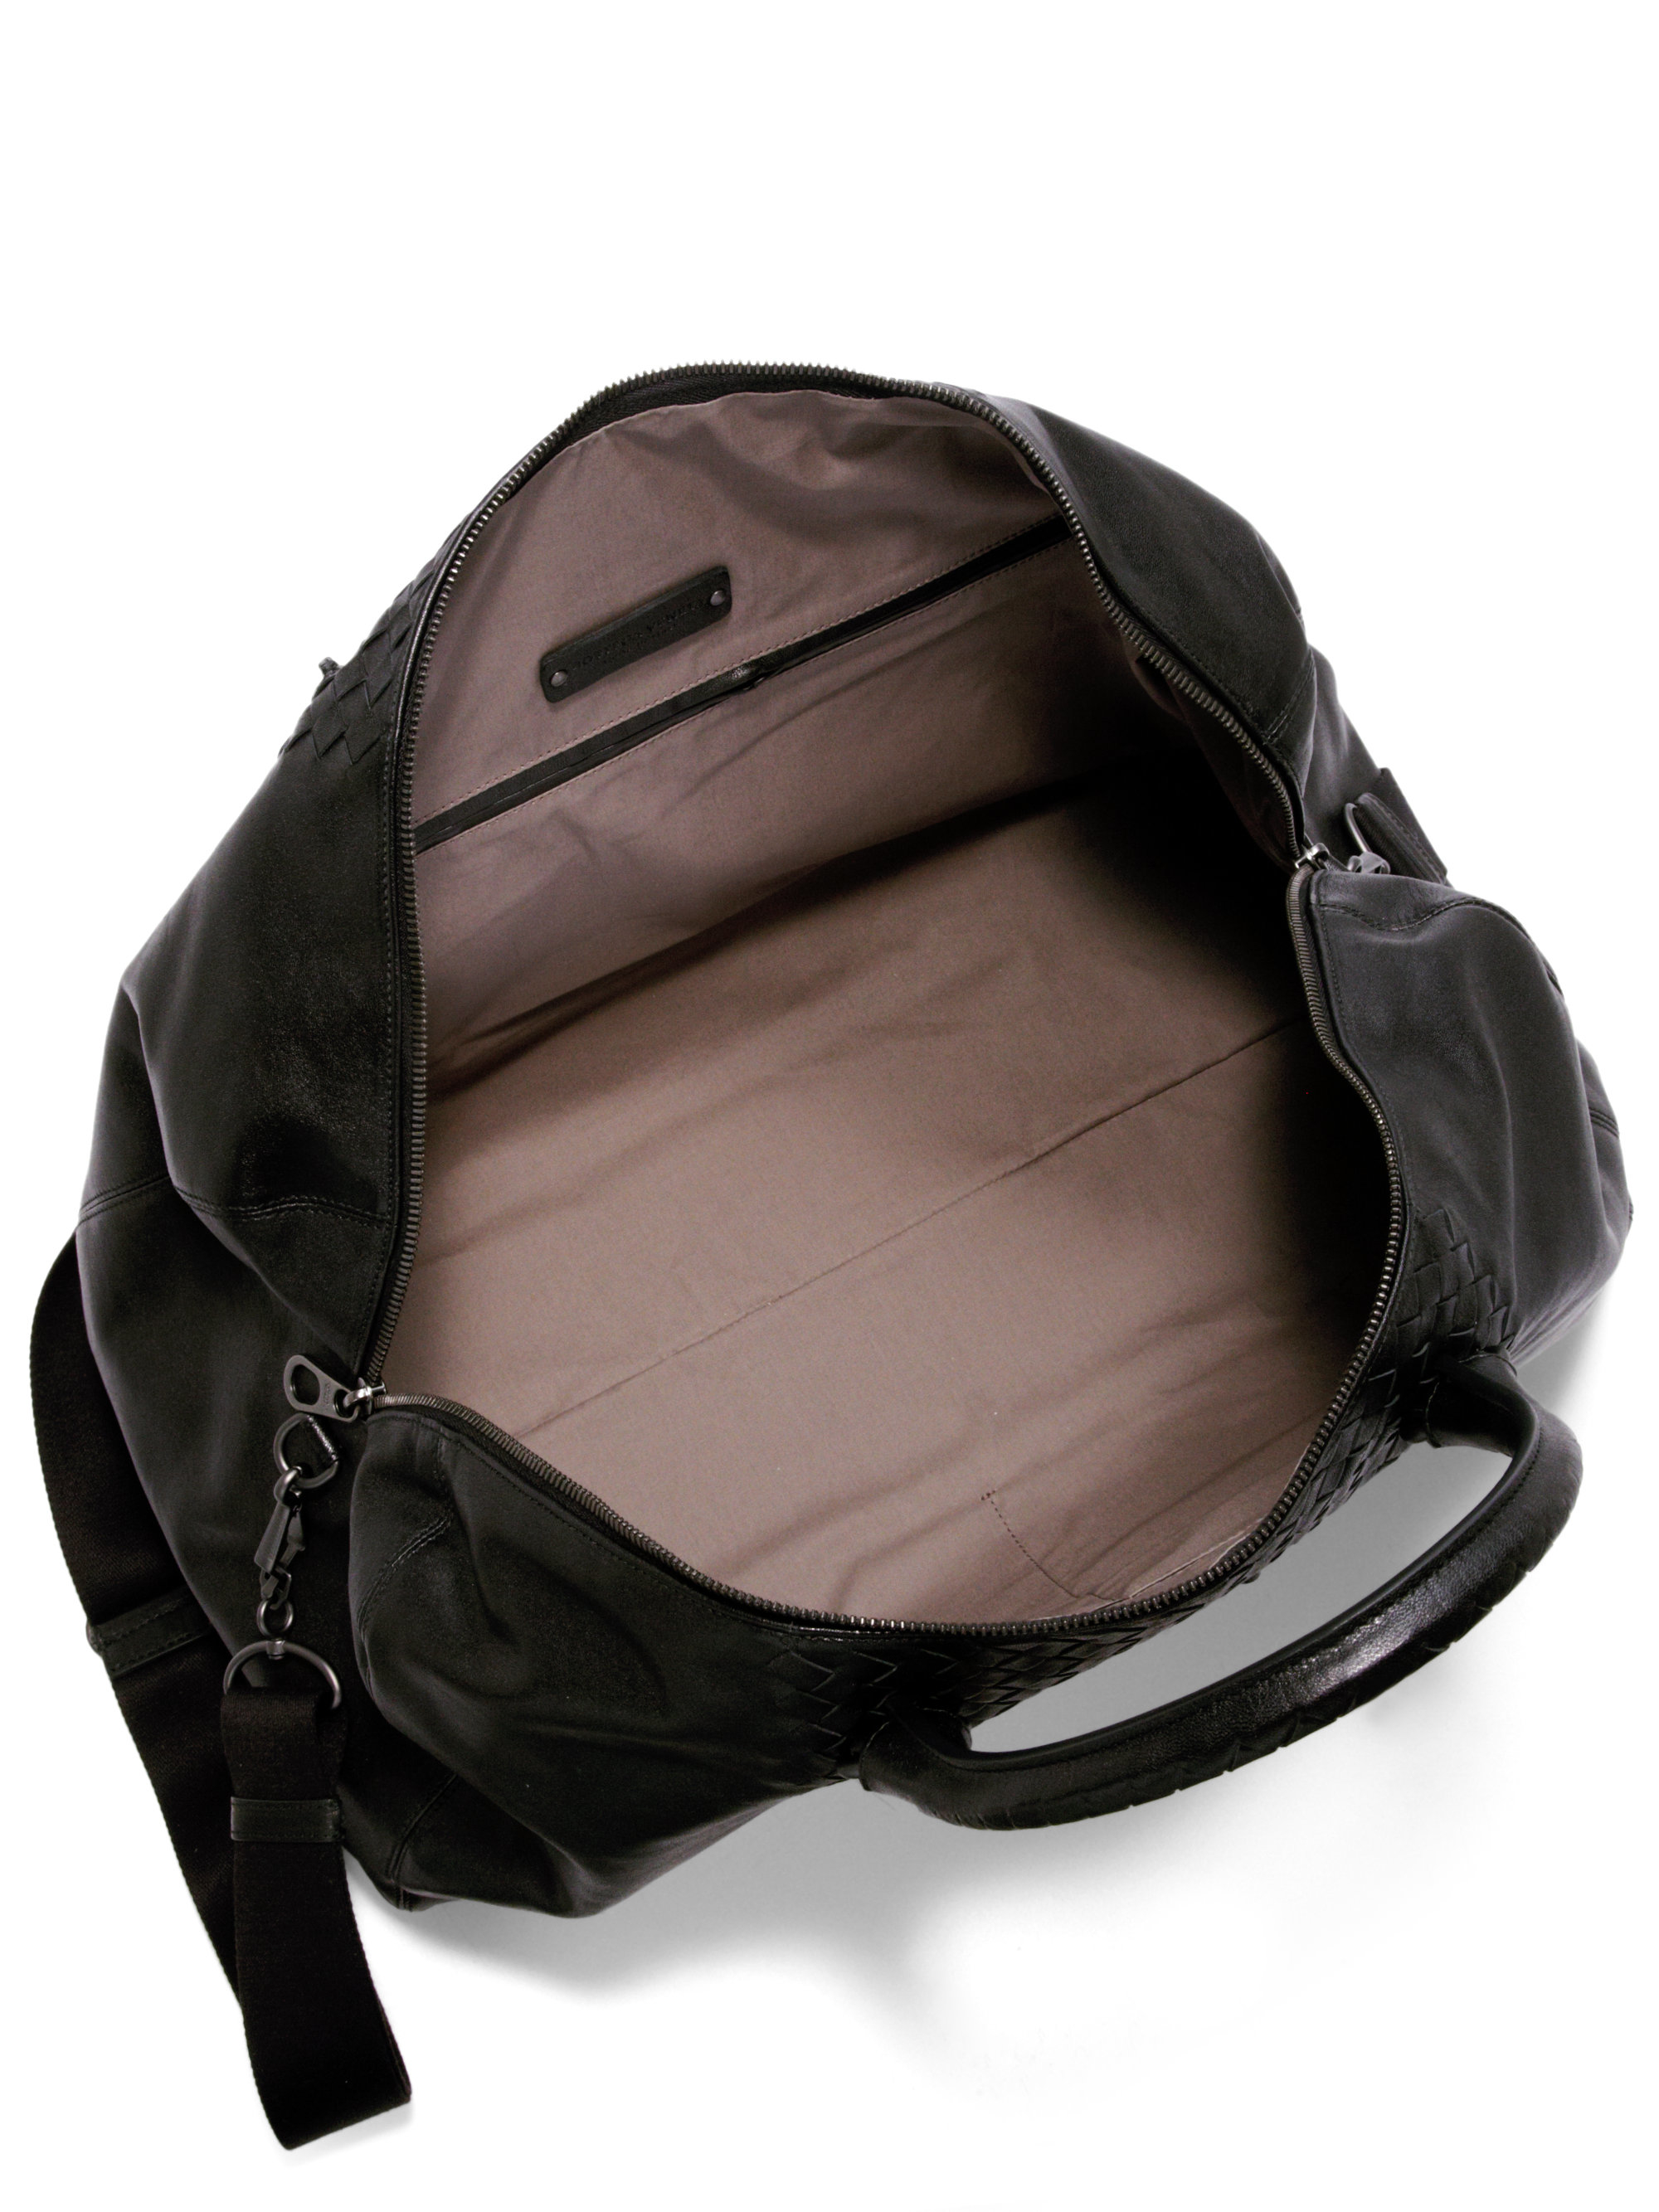 Lyst - Bottega Veneta Intrecciato Leather Duffel Bag in Black for Men